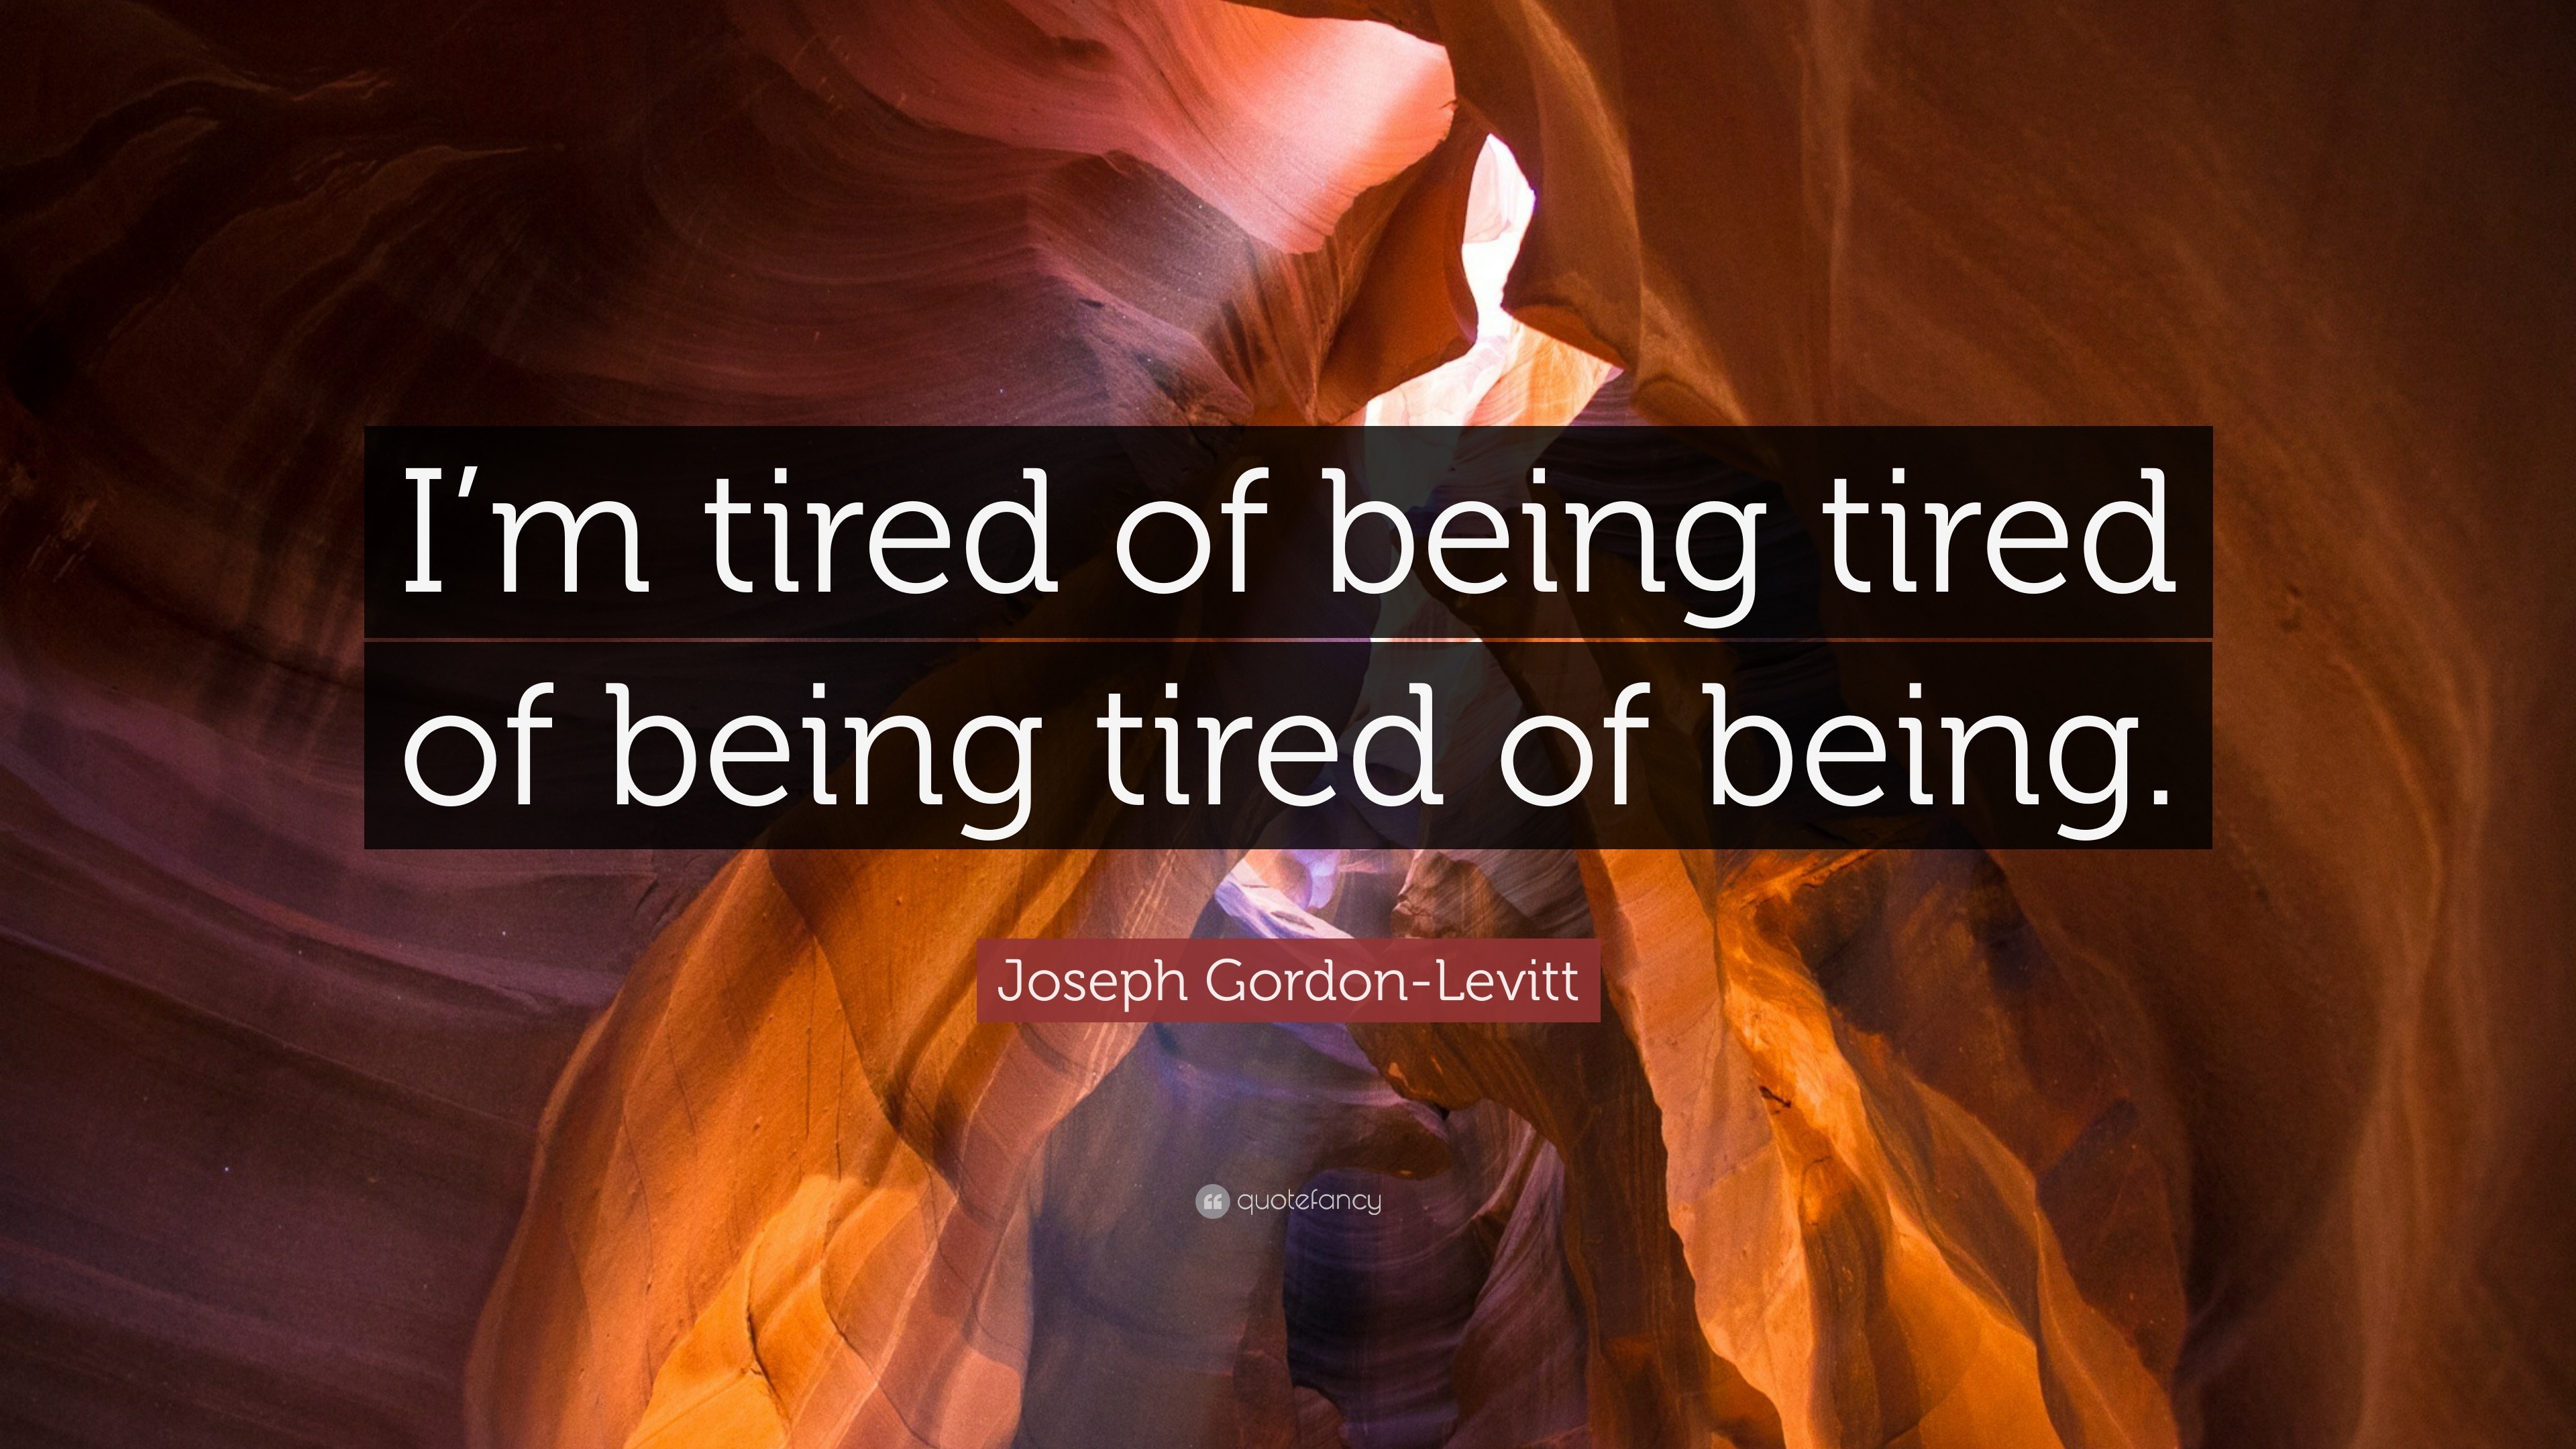 Joseph Gordon-Levitt Quote: “I’m tired of being tired of being tired of